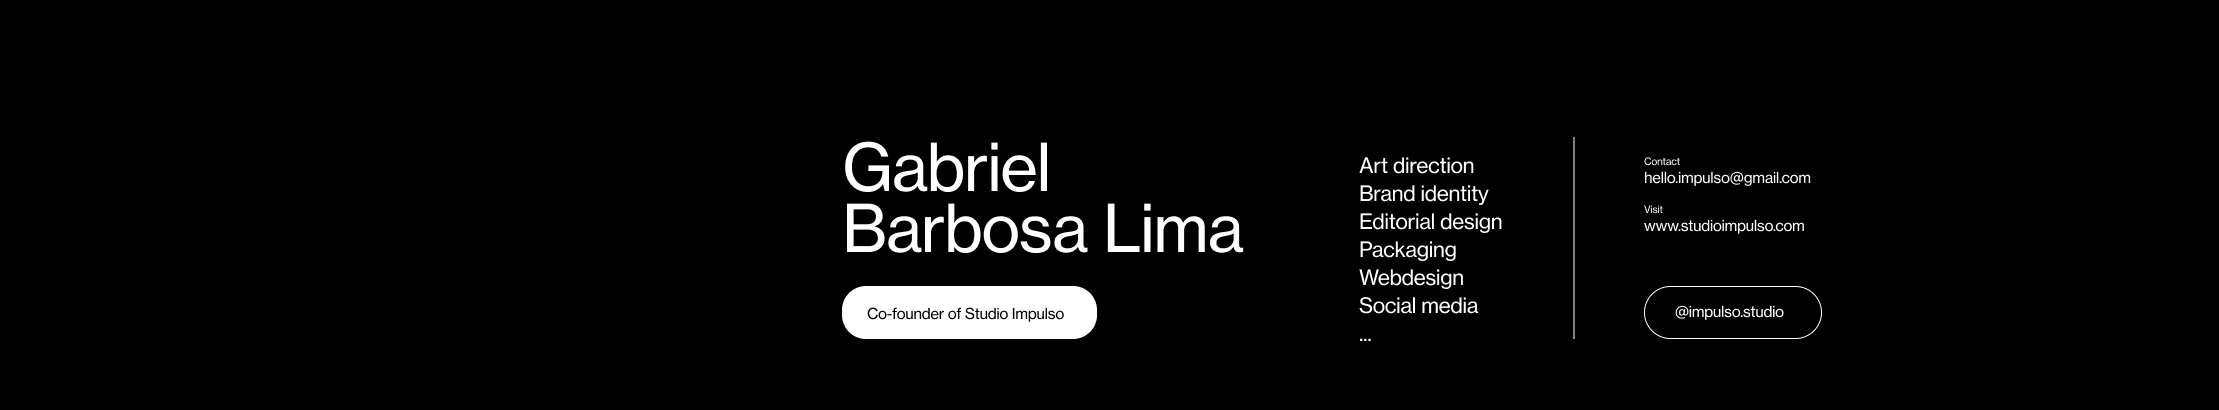 Gabriel Barbosa Lima's profile banner